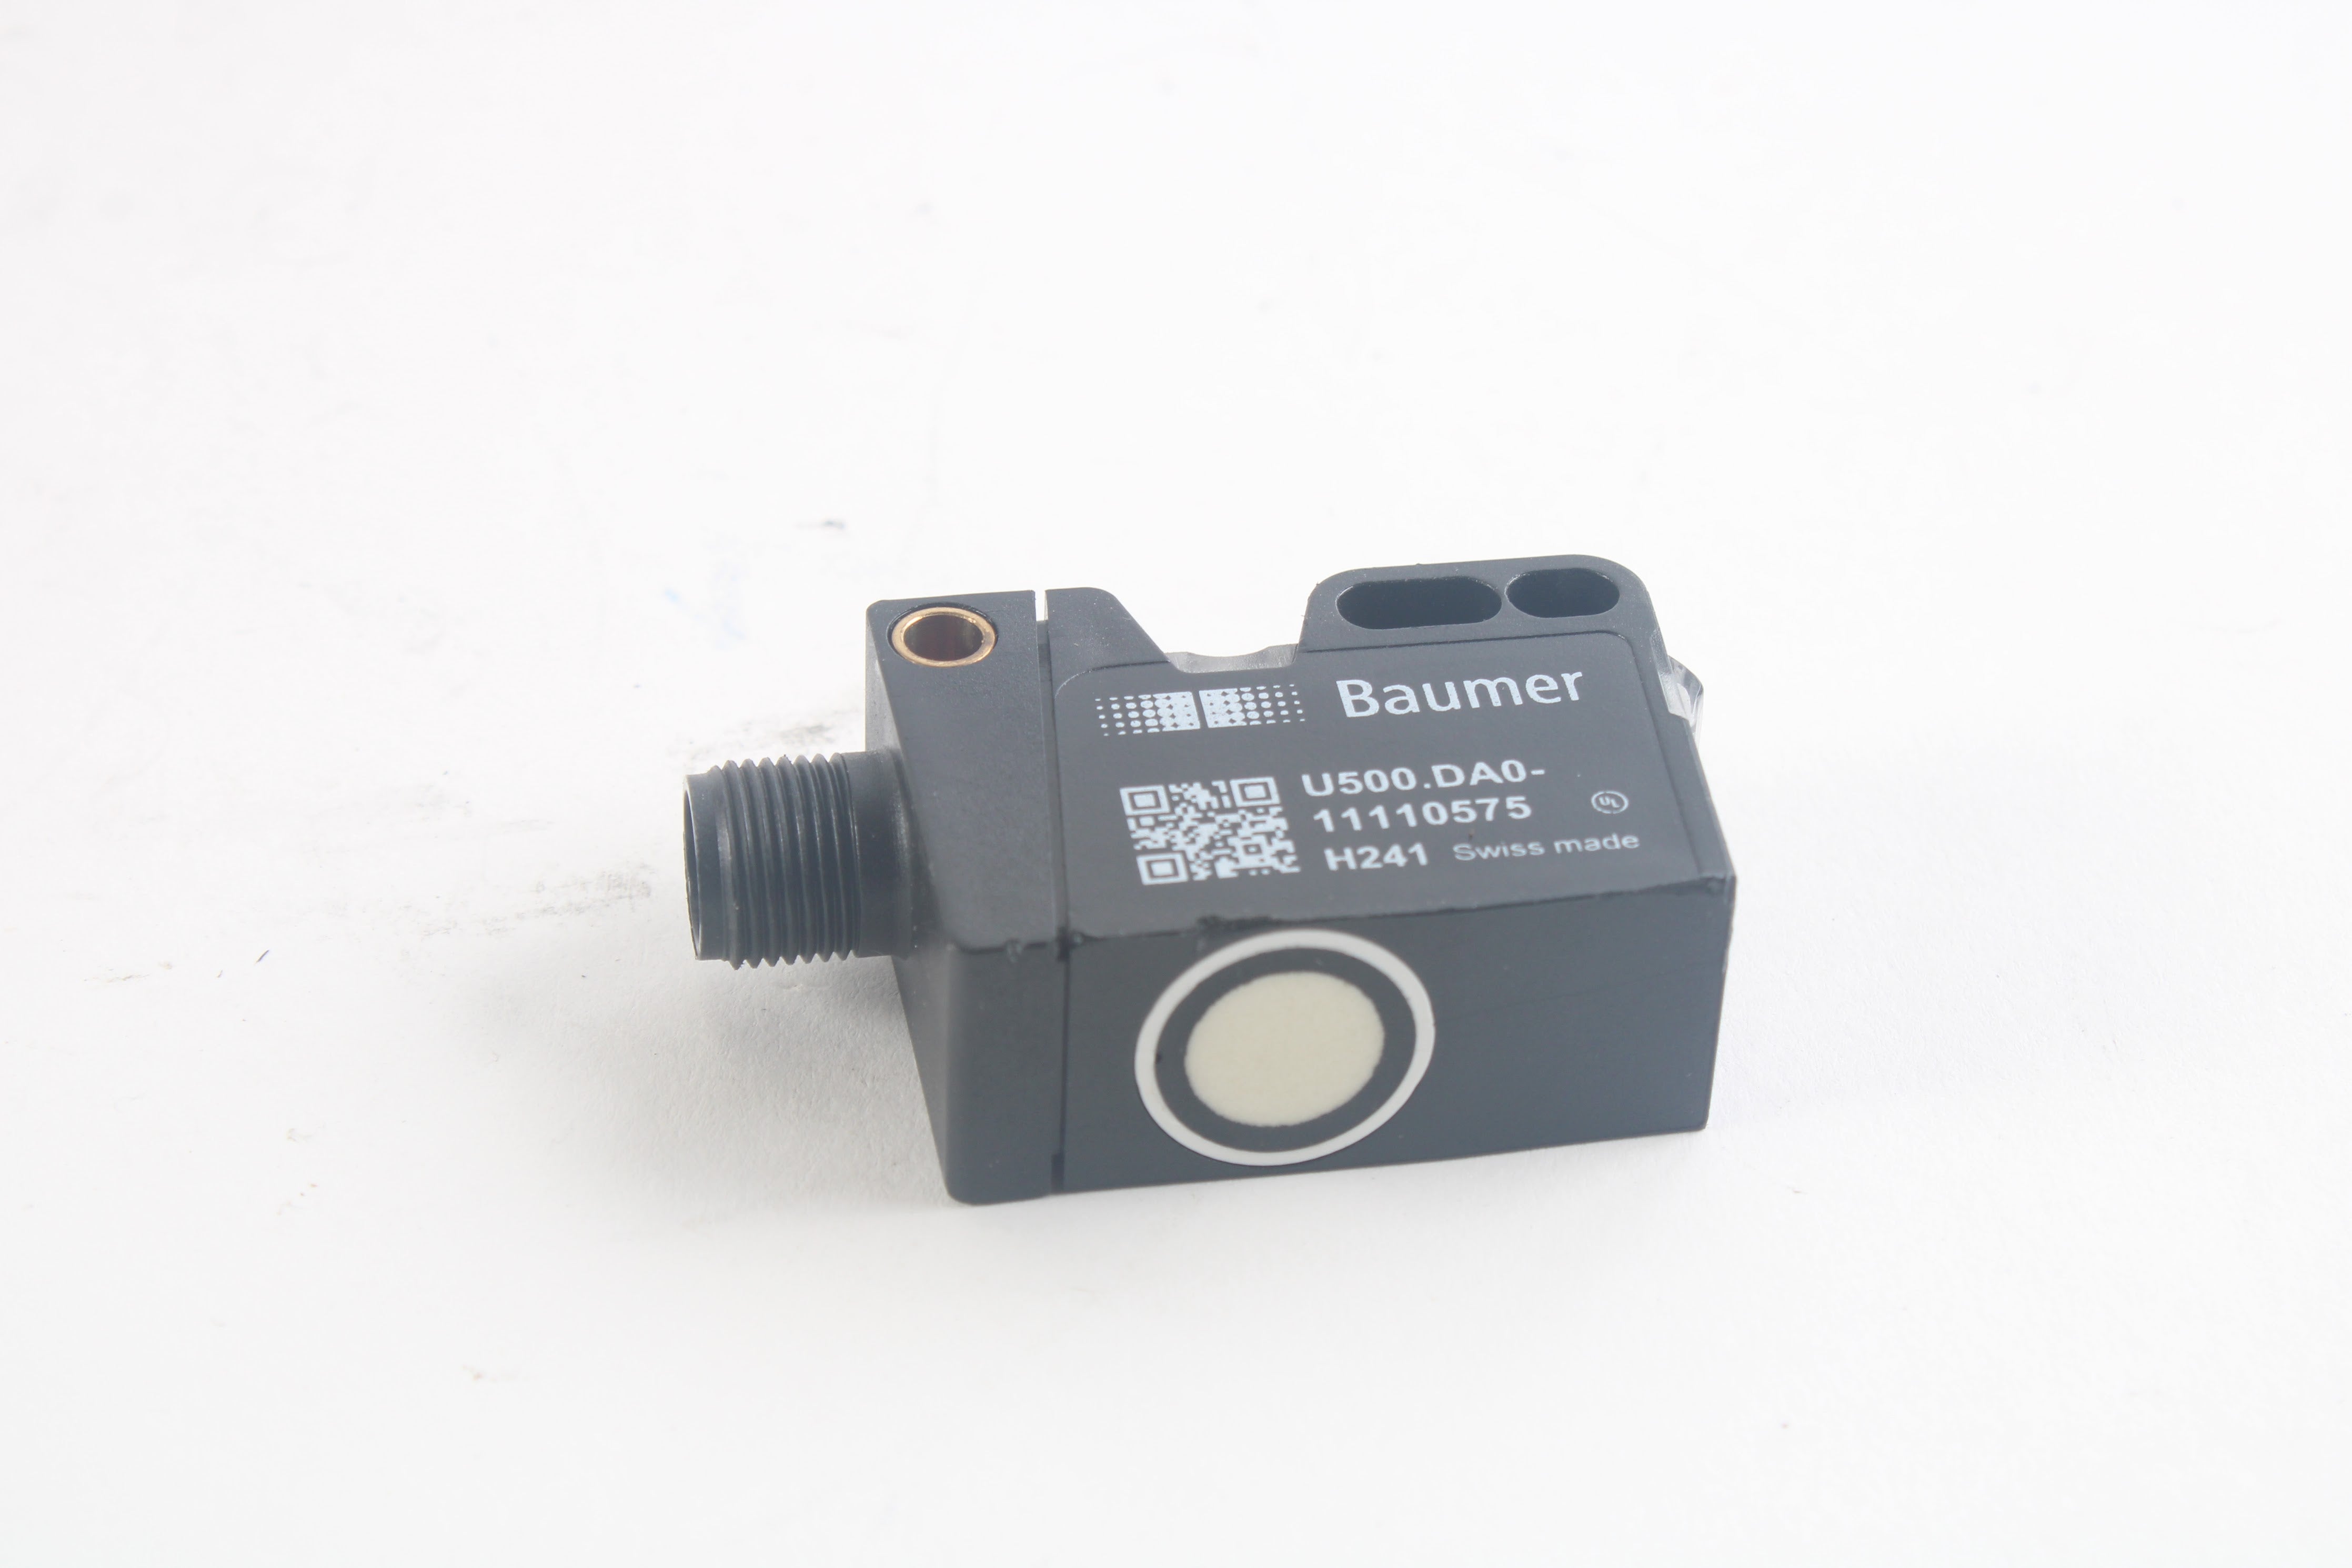 Baumer Ultrasonic Distance Measuring Sensor – NTC  Tech